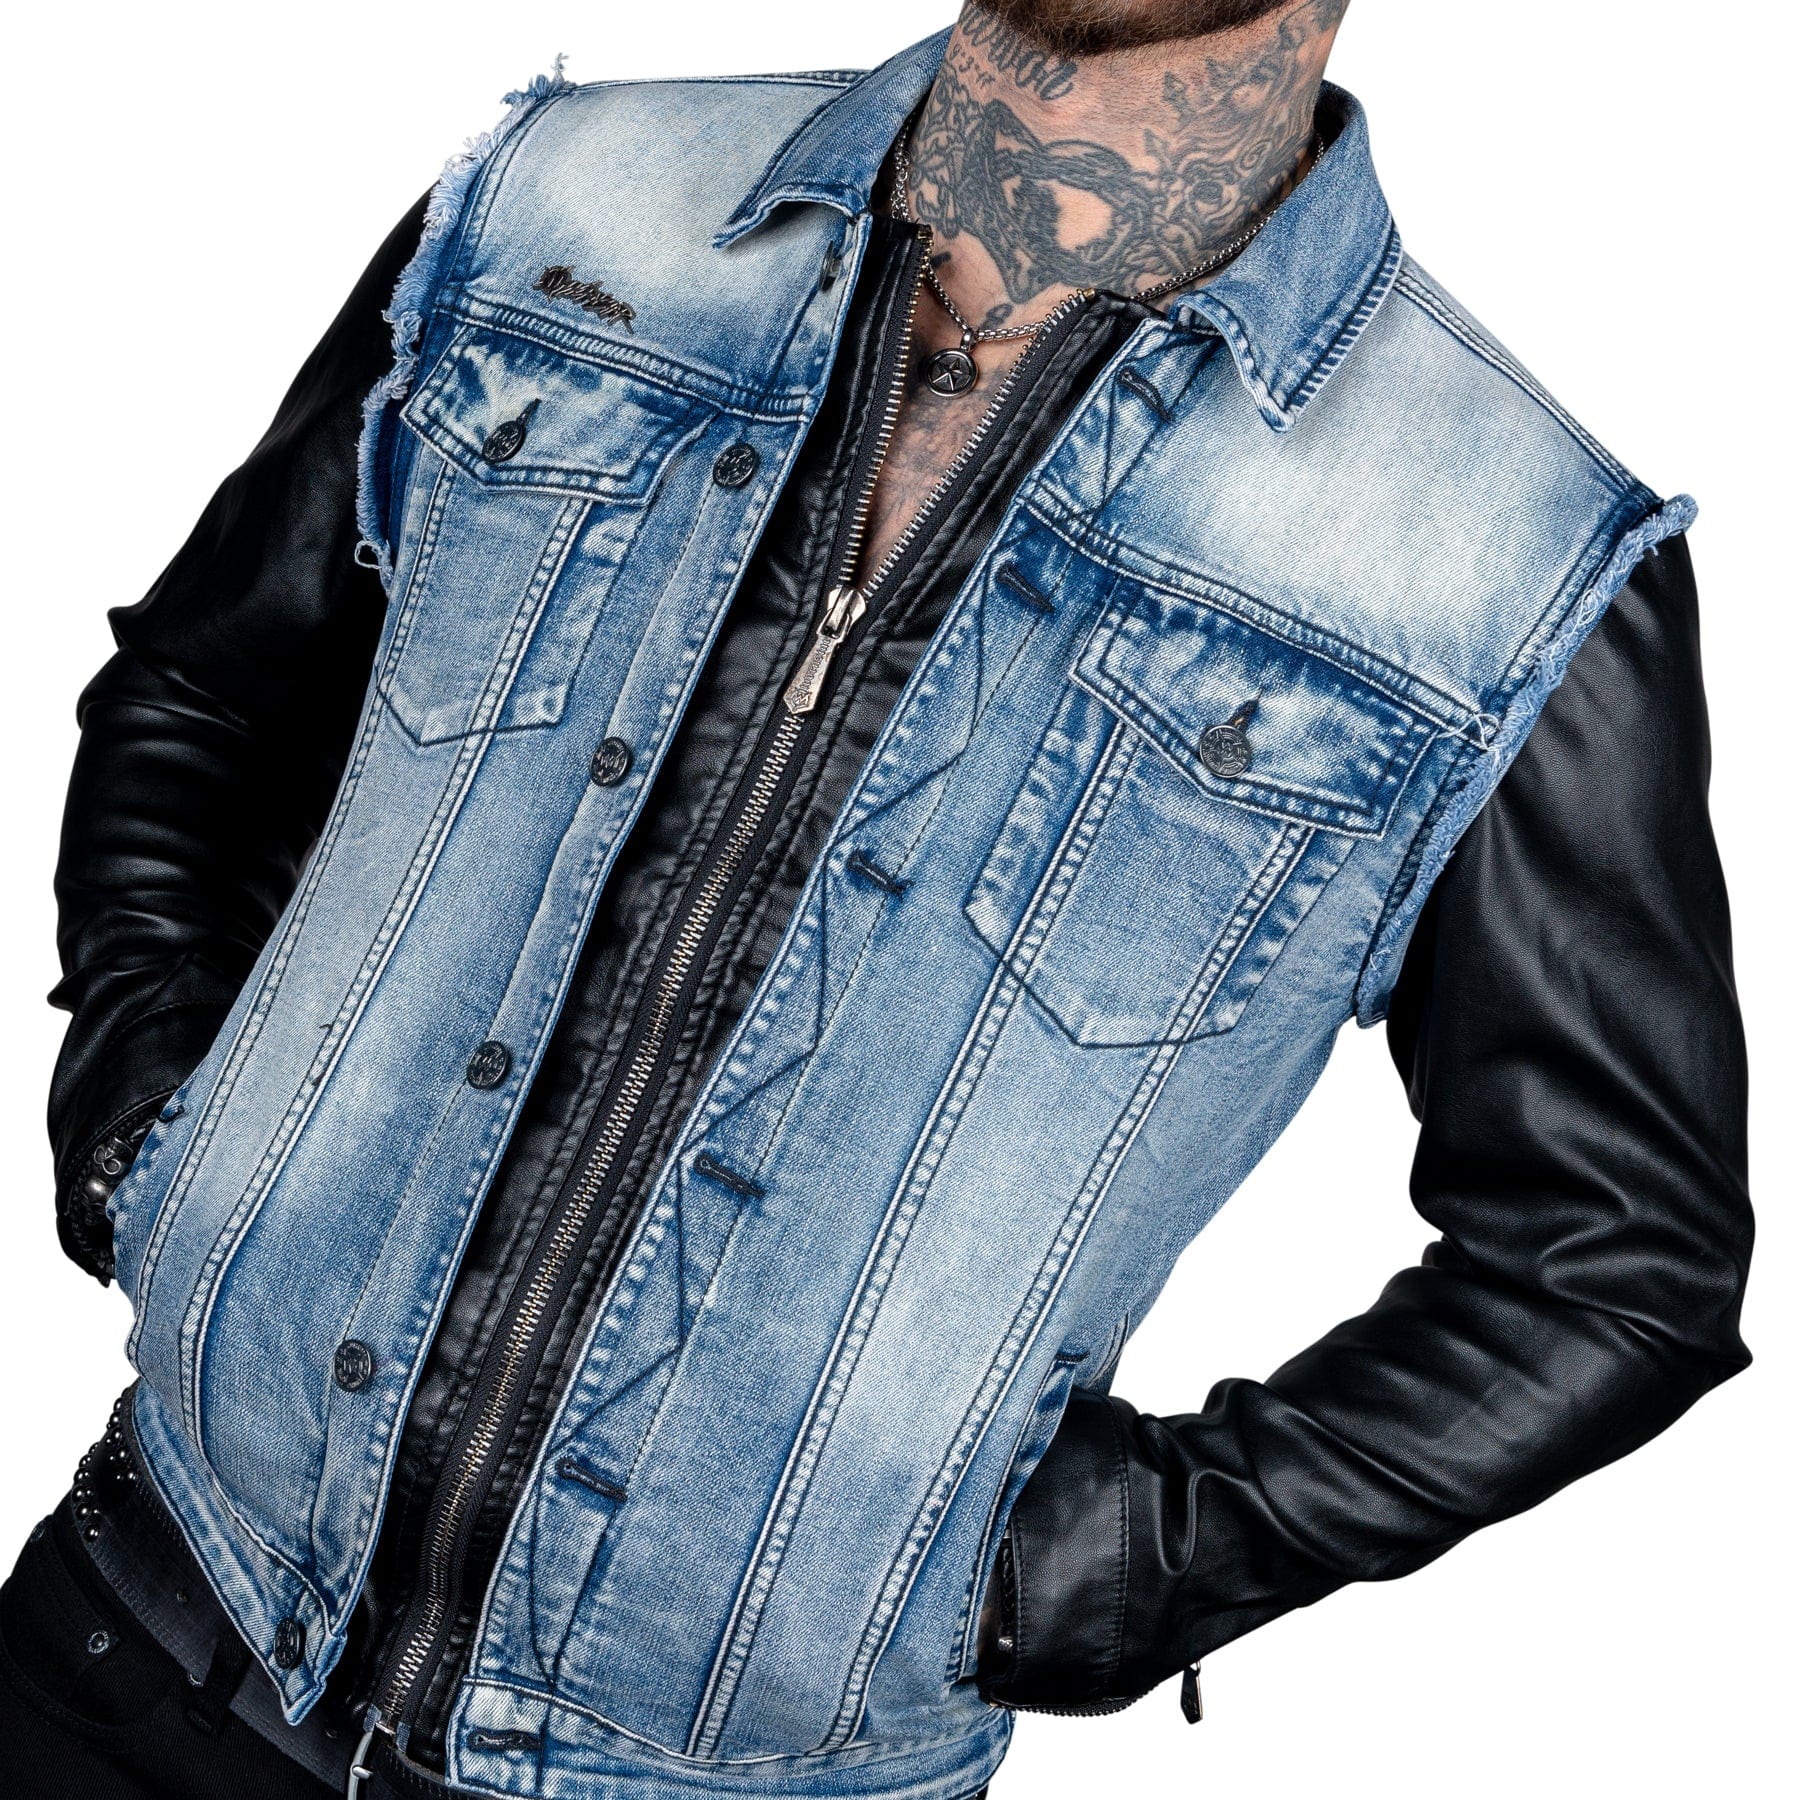 Denim jacket with leather sleeves | simplystudded